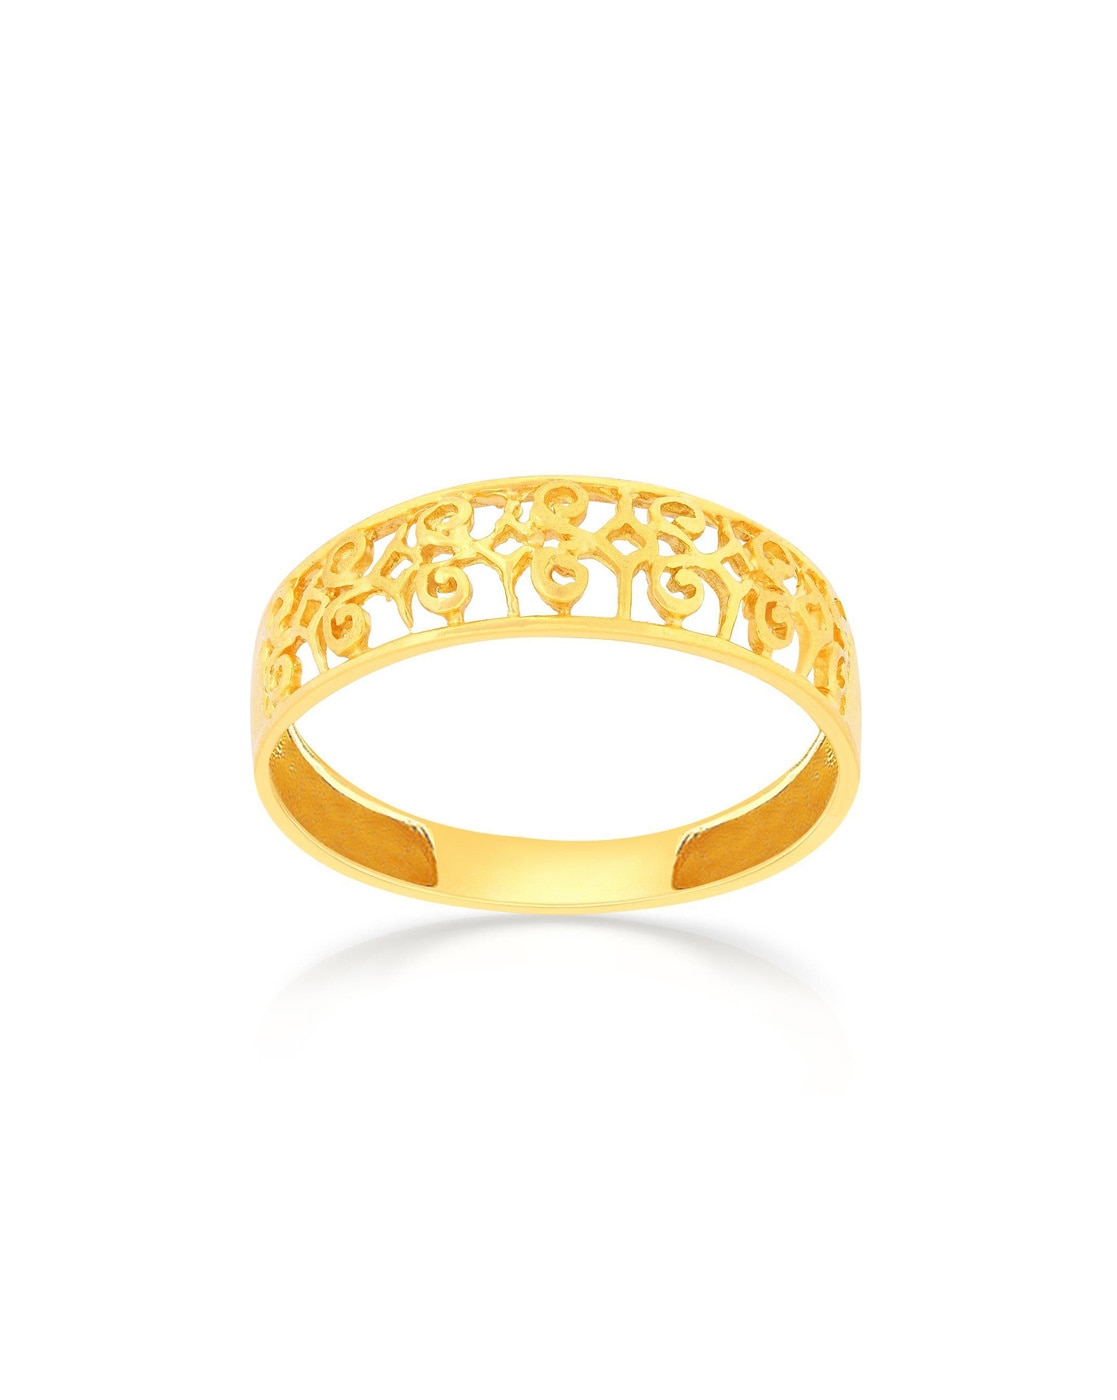 MALABAR GOLD & DIAMONDS JIRWM0053G 18kt Diamond White Gold, Yellow Gold ring  Price in India - Buy MALABAR GOLD & DIAMONDS JIRWM0053G 18kt Diamond White  Gold, Yellow Gold ring online at Flipkart.com